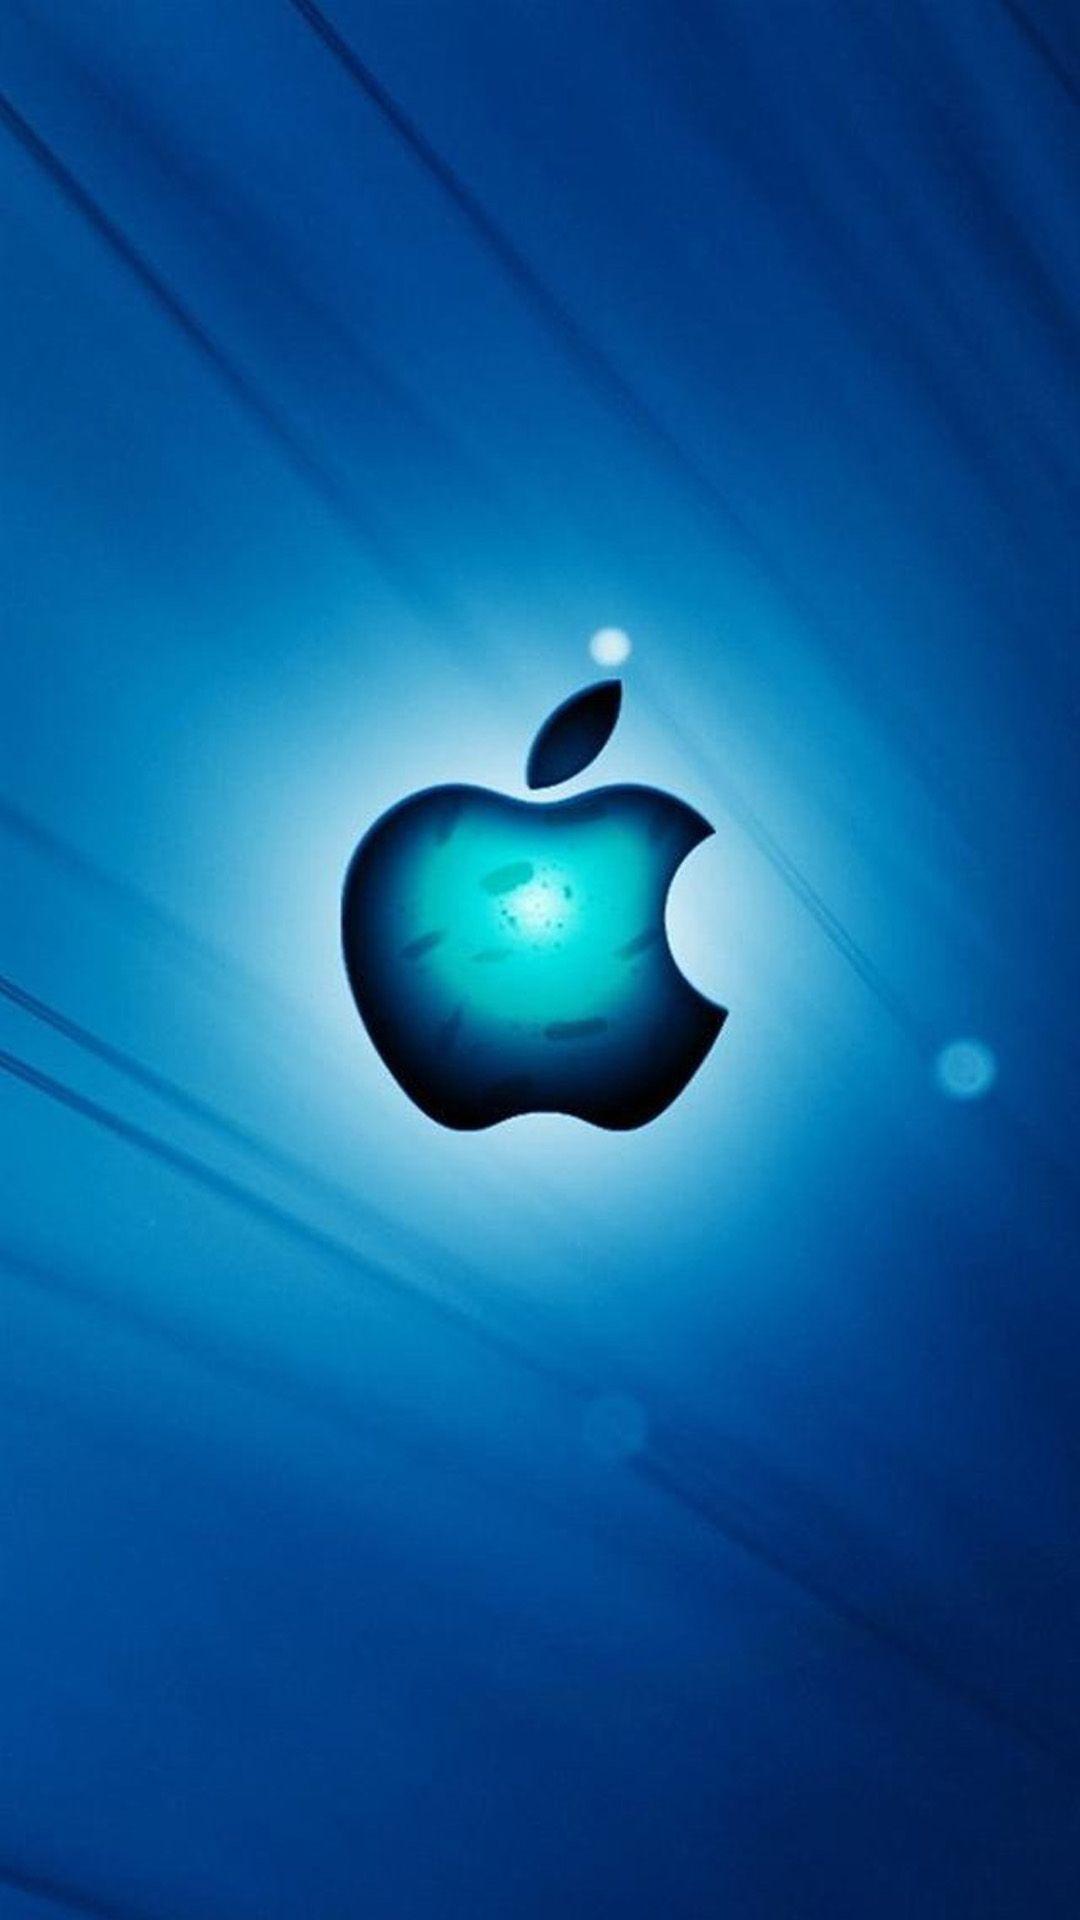 Funny Apple iPhone logo wallpaper